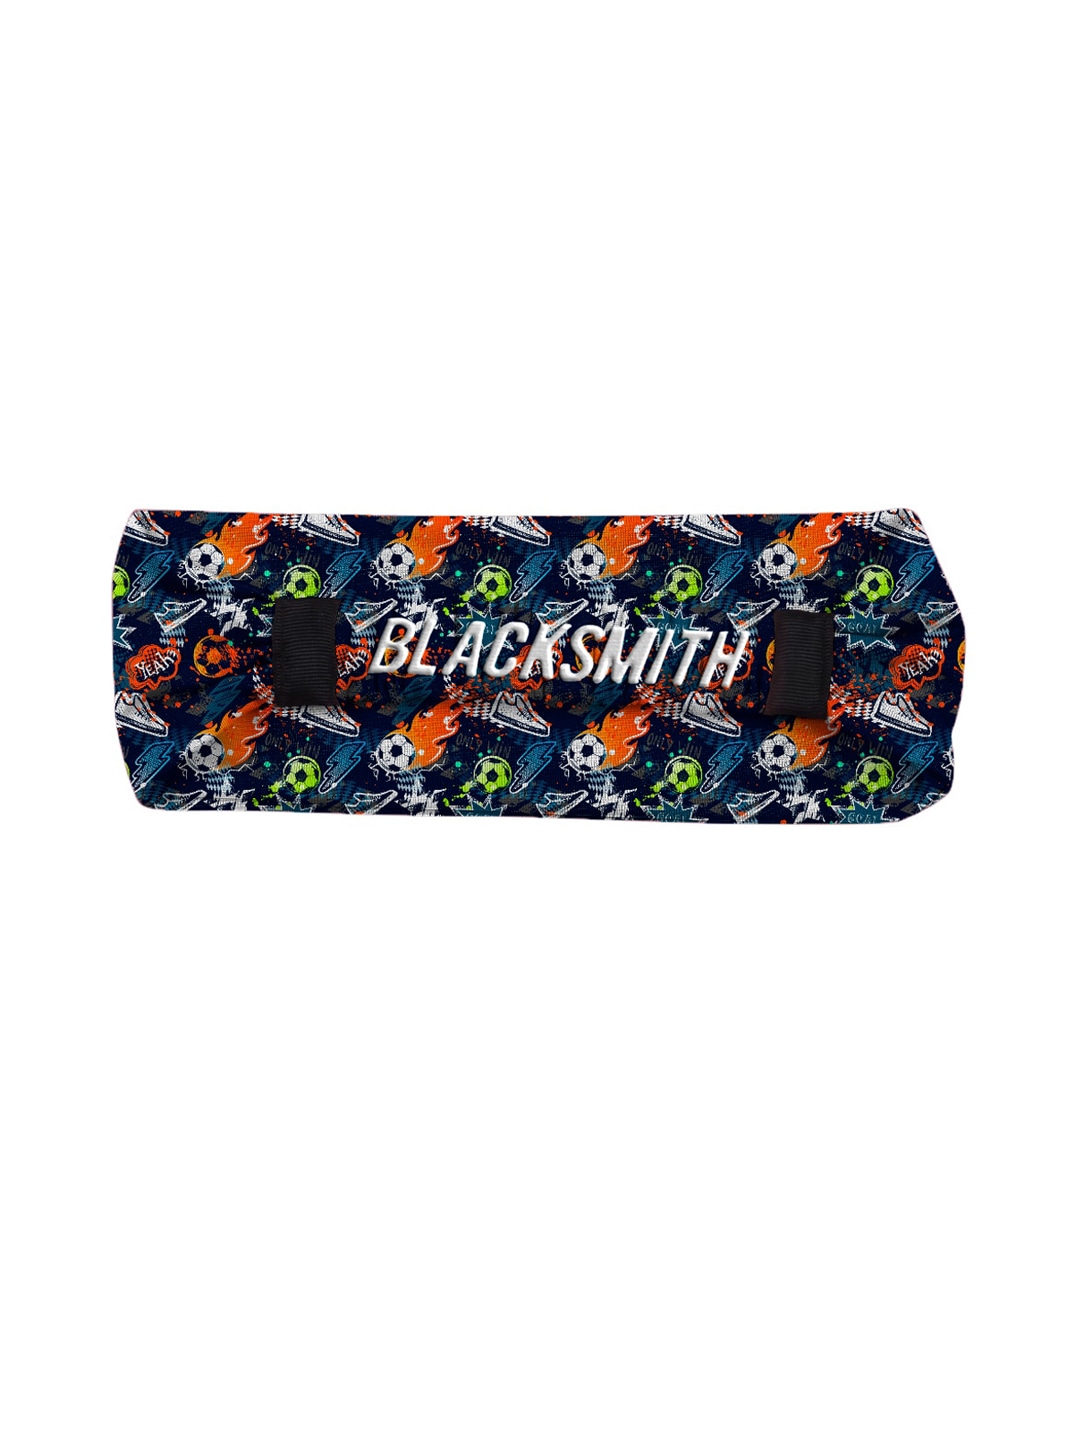 Accessories Headband | Blacksmith Unisex Blue & Orange Printed Sports Headband - FM47014